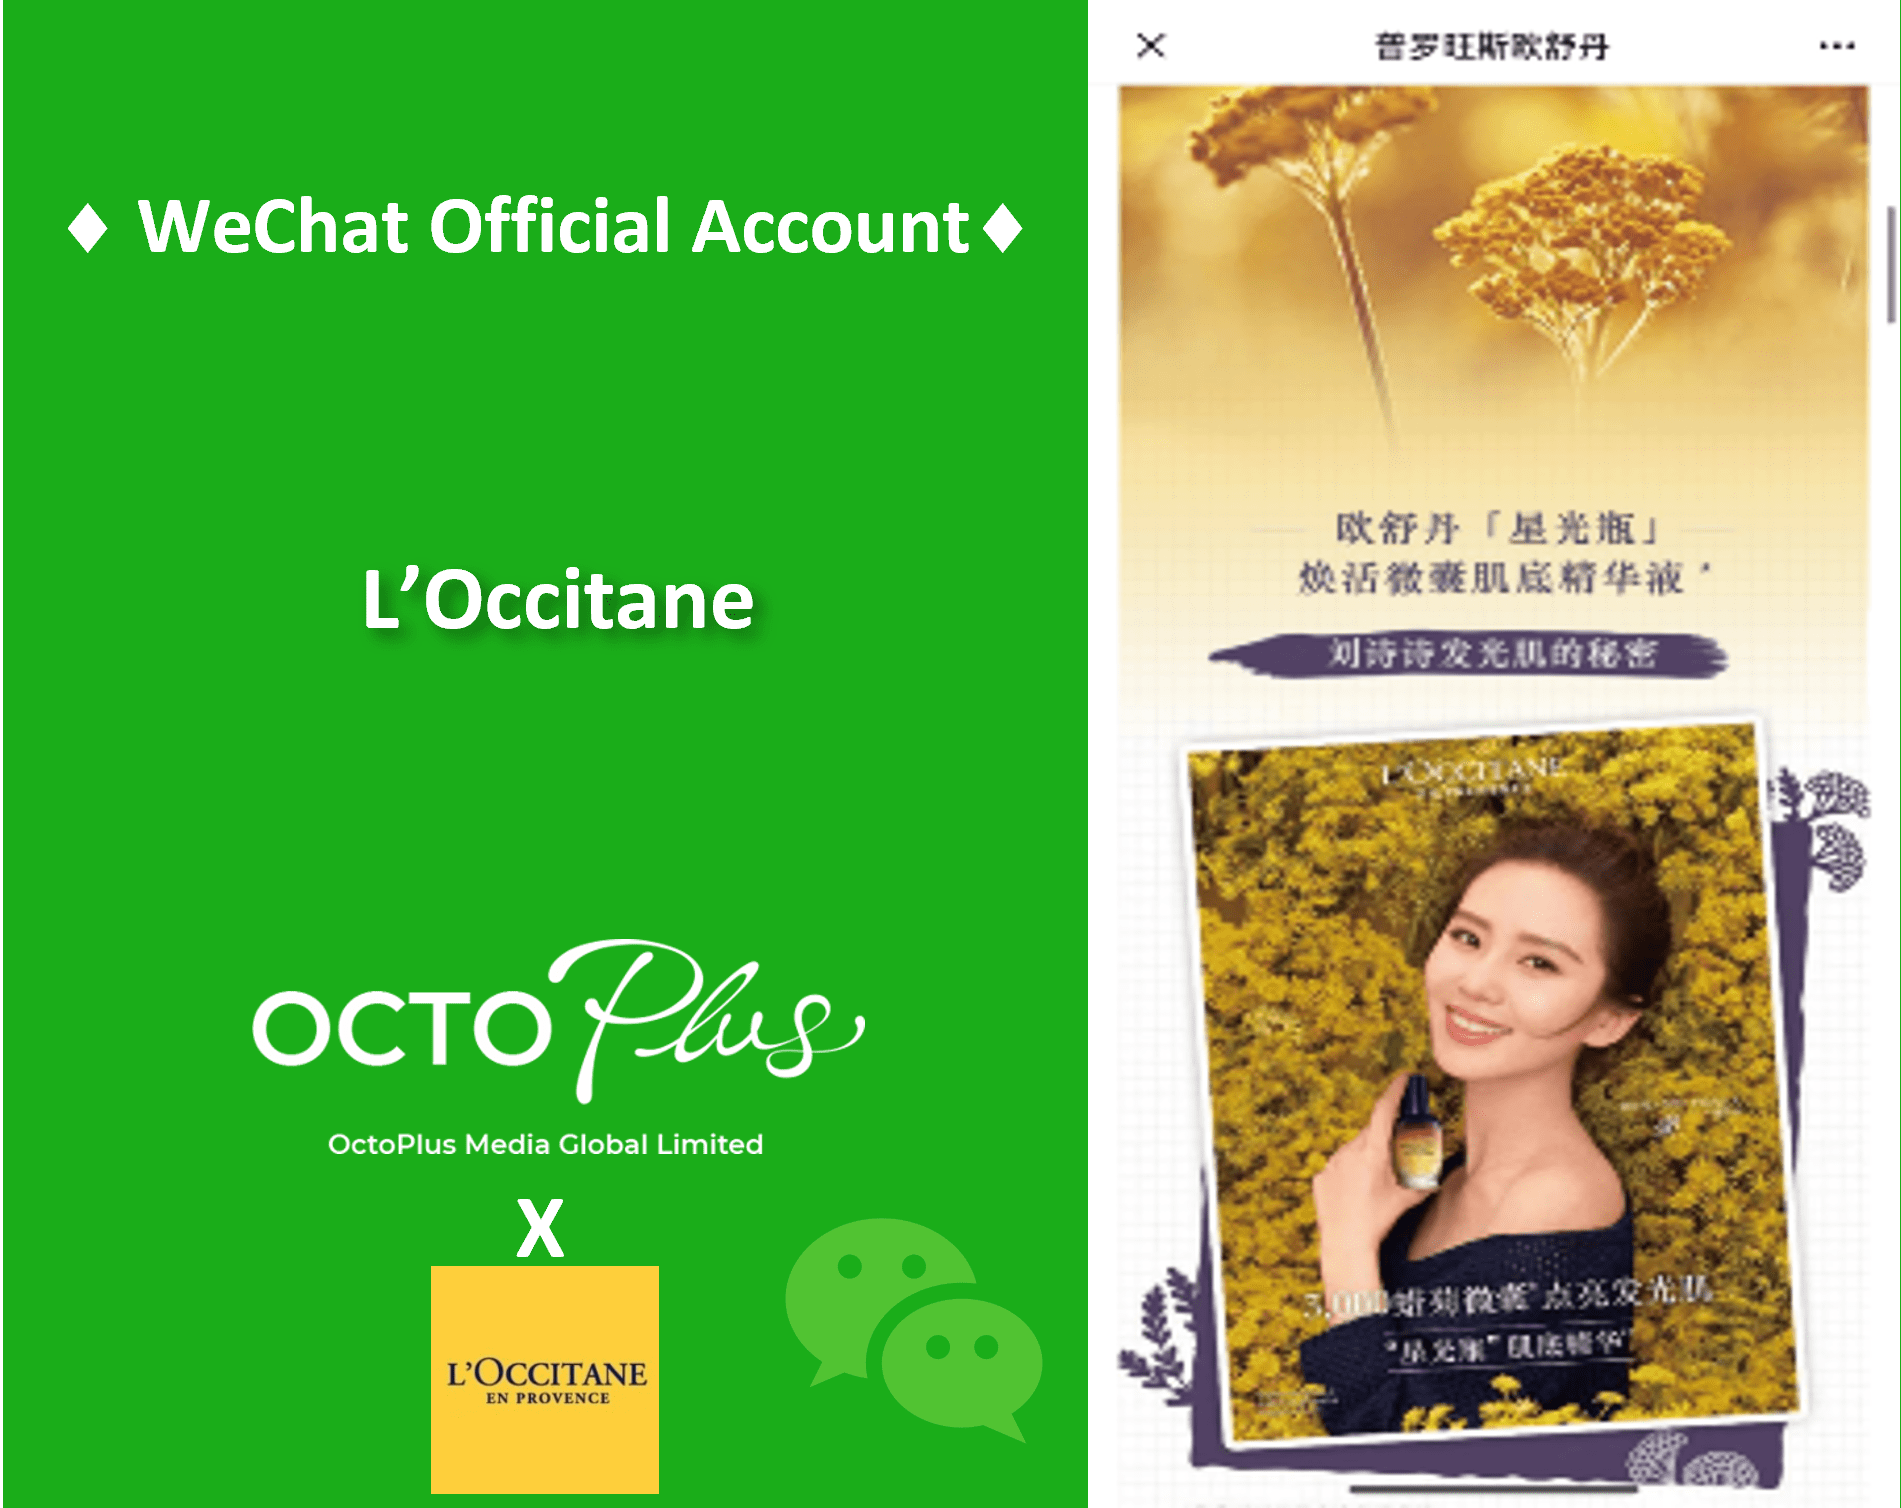 L'Occitane WeChat Official Account and content management